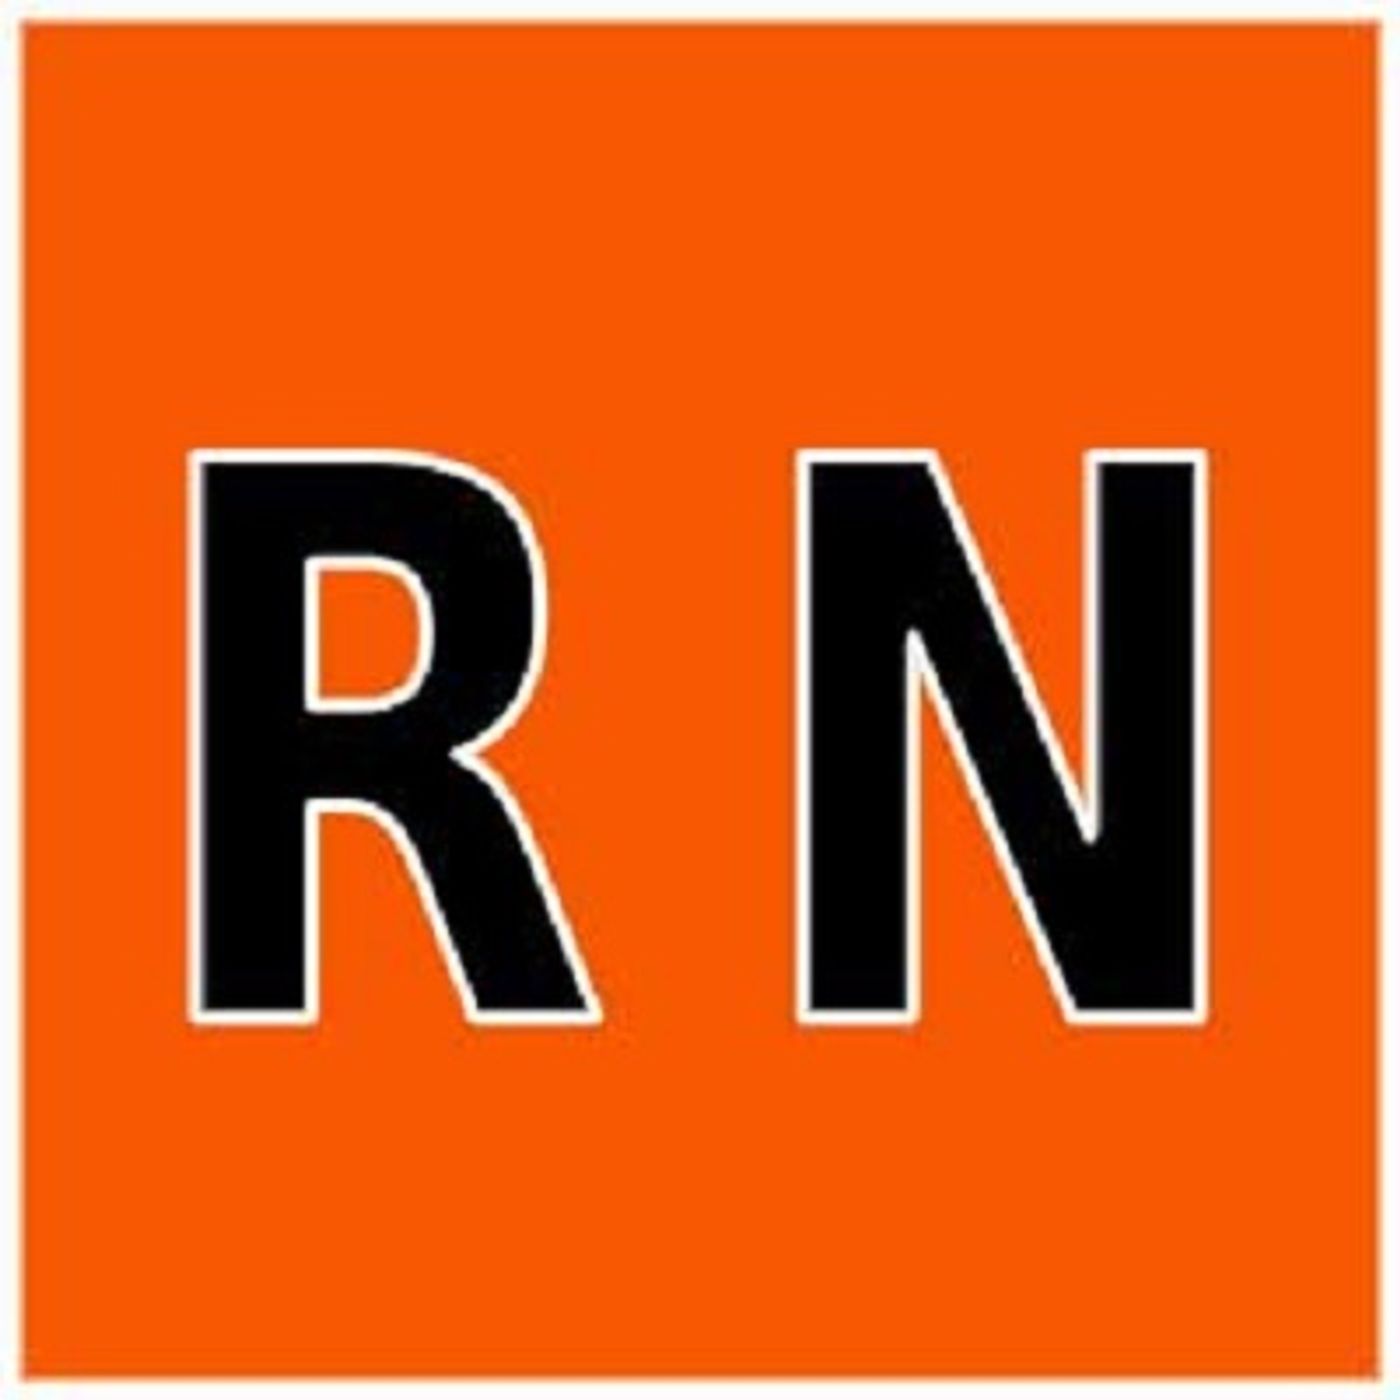 Raconteurs News's tracks